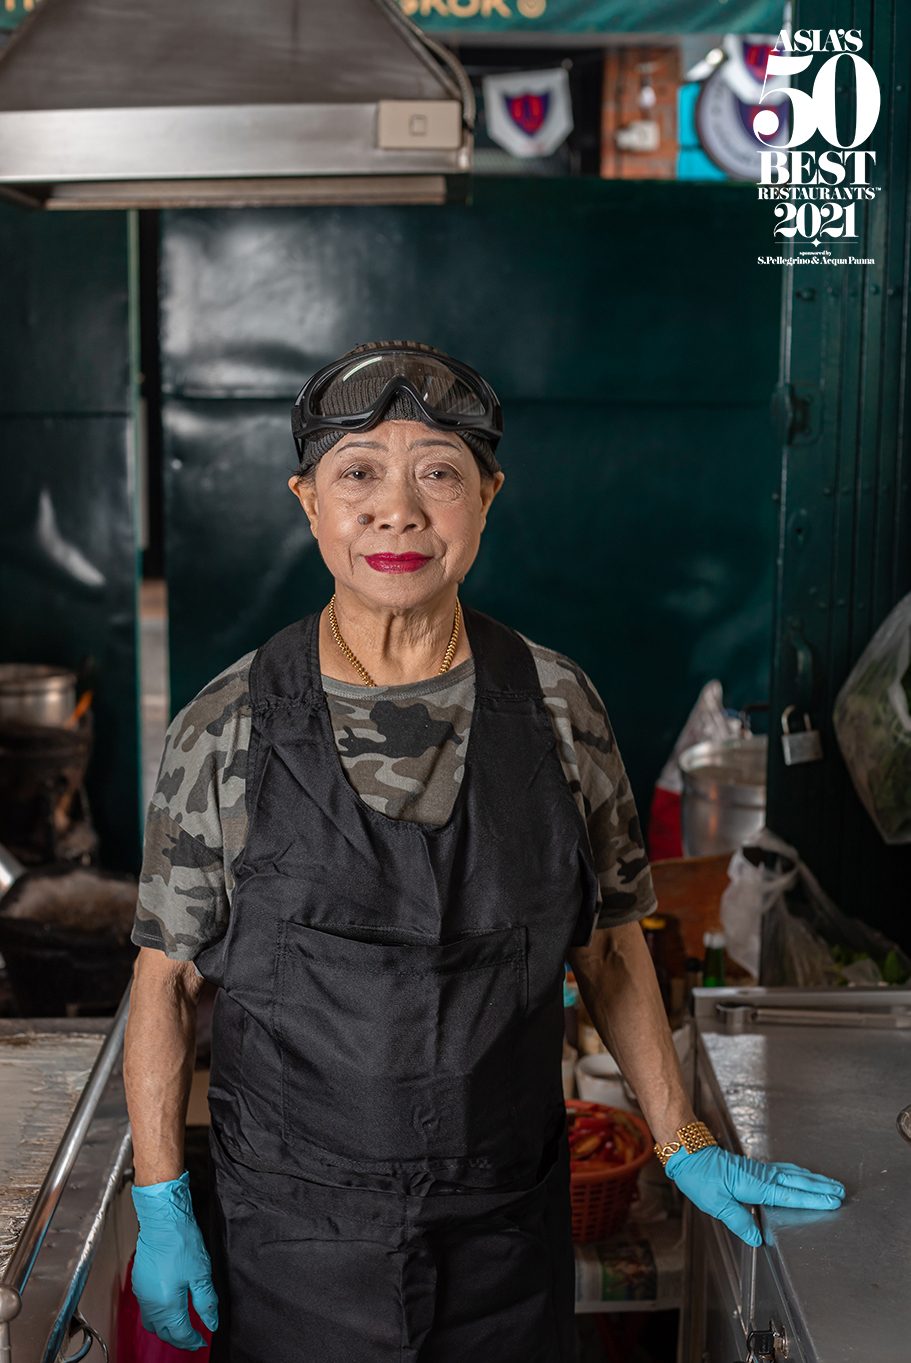 Bangkok street food chef Jay Fai receives Asia’s Best Icon Award 2021